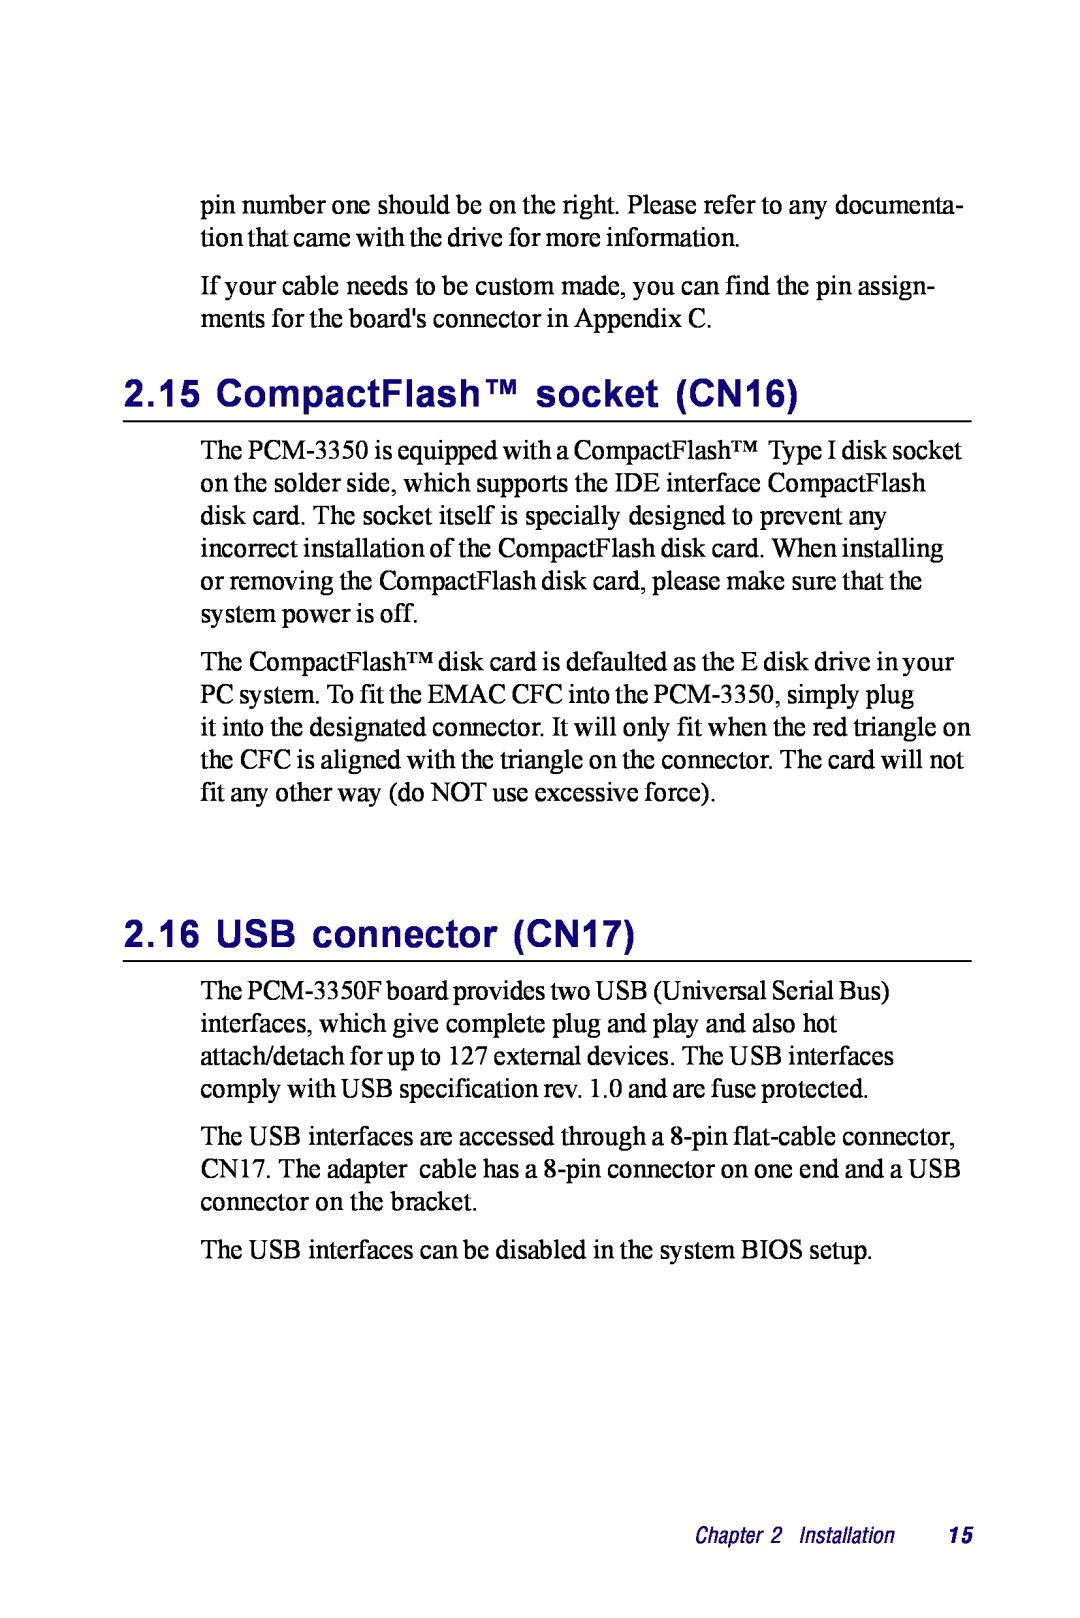 Advantech PCM-3350 Series user manual CompactFlash socket CN16, USB connector CN17 